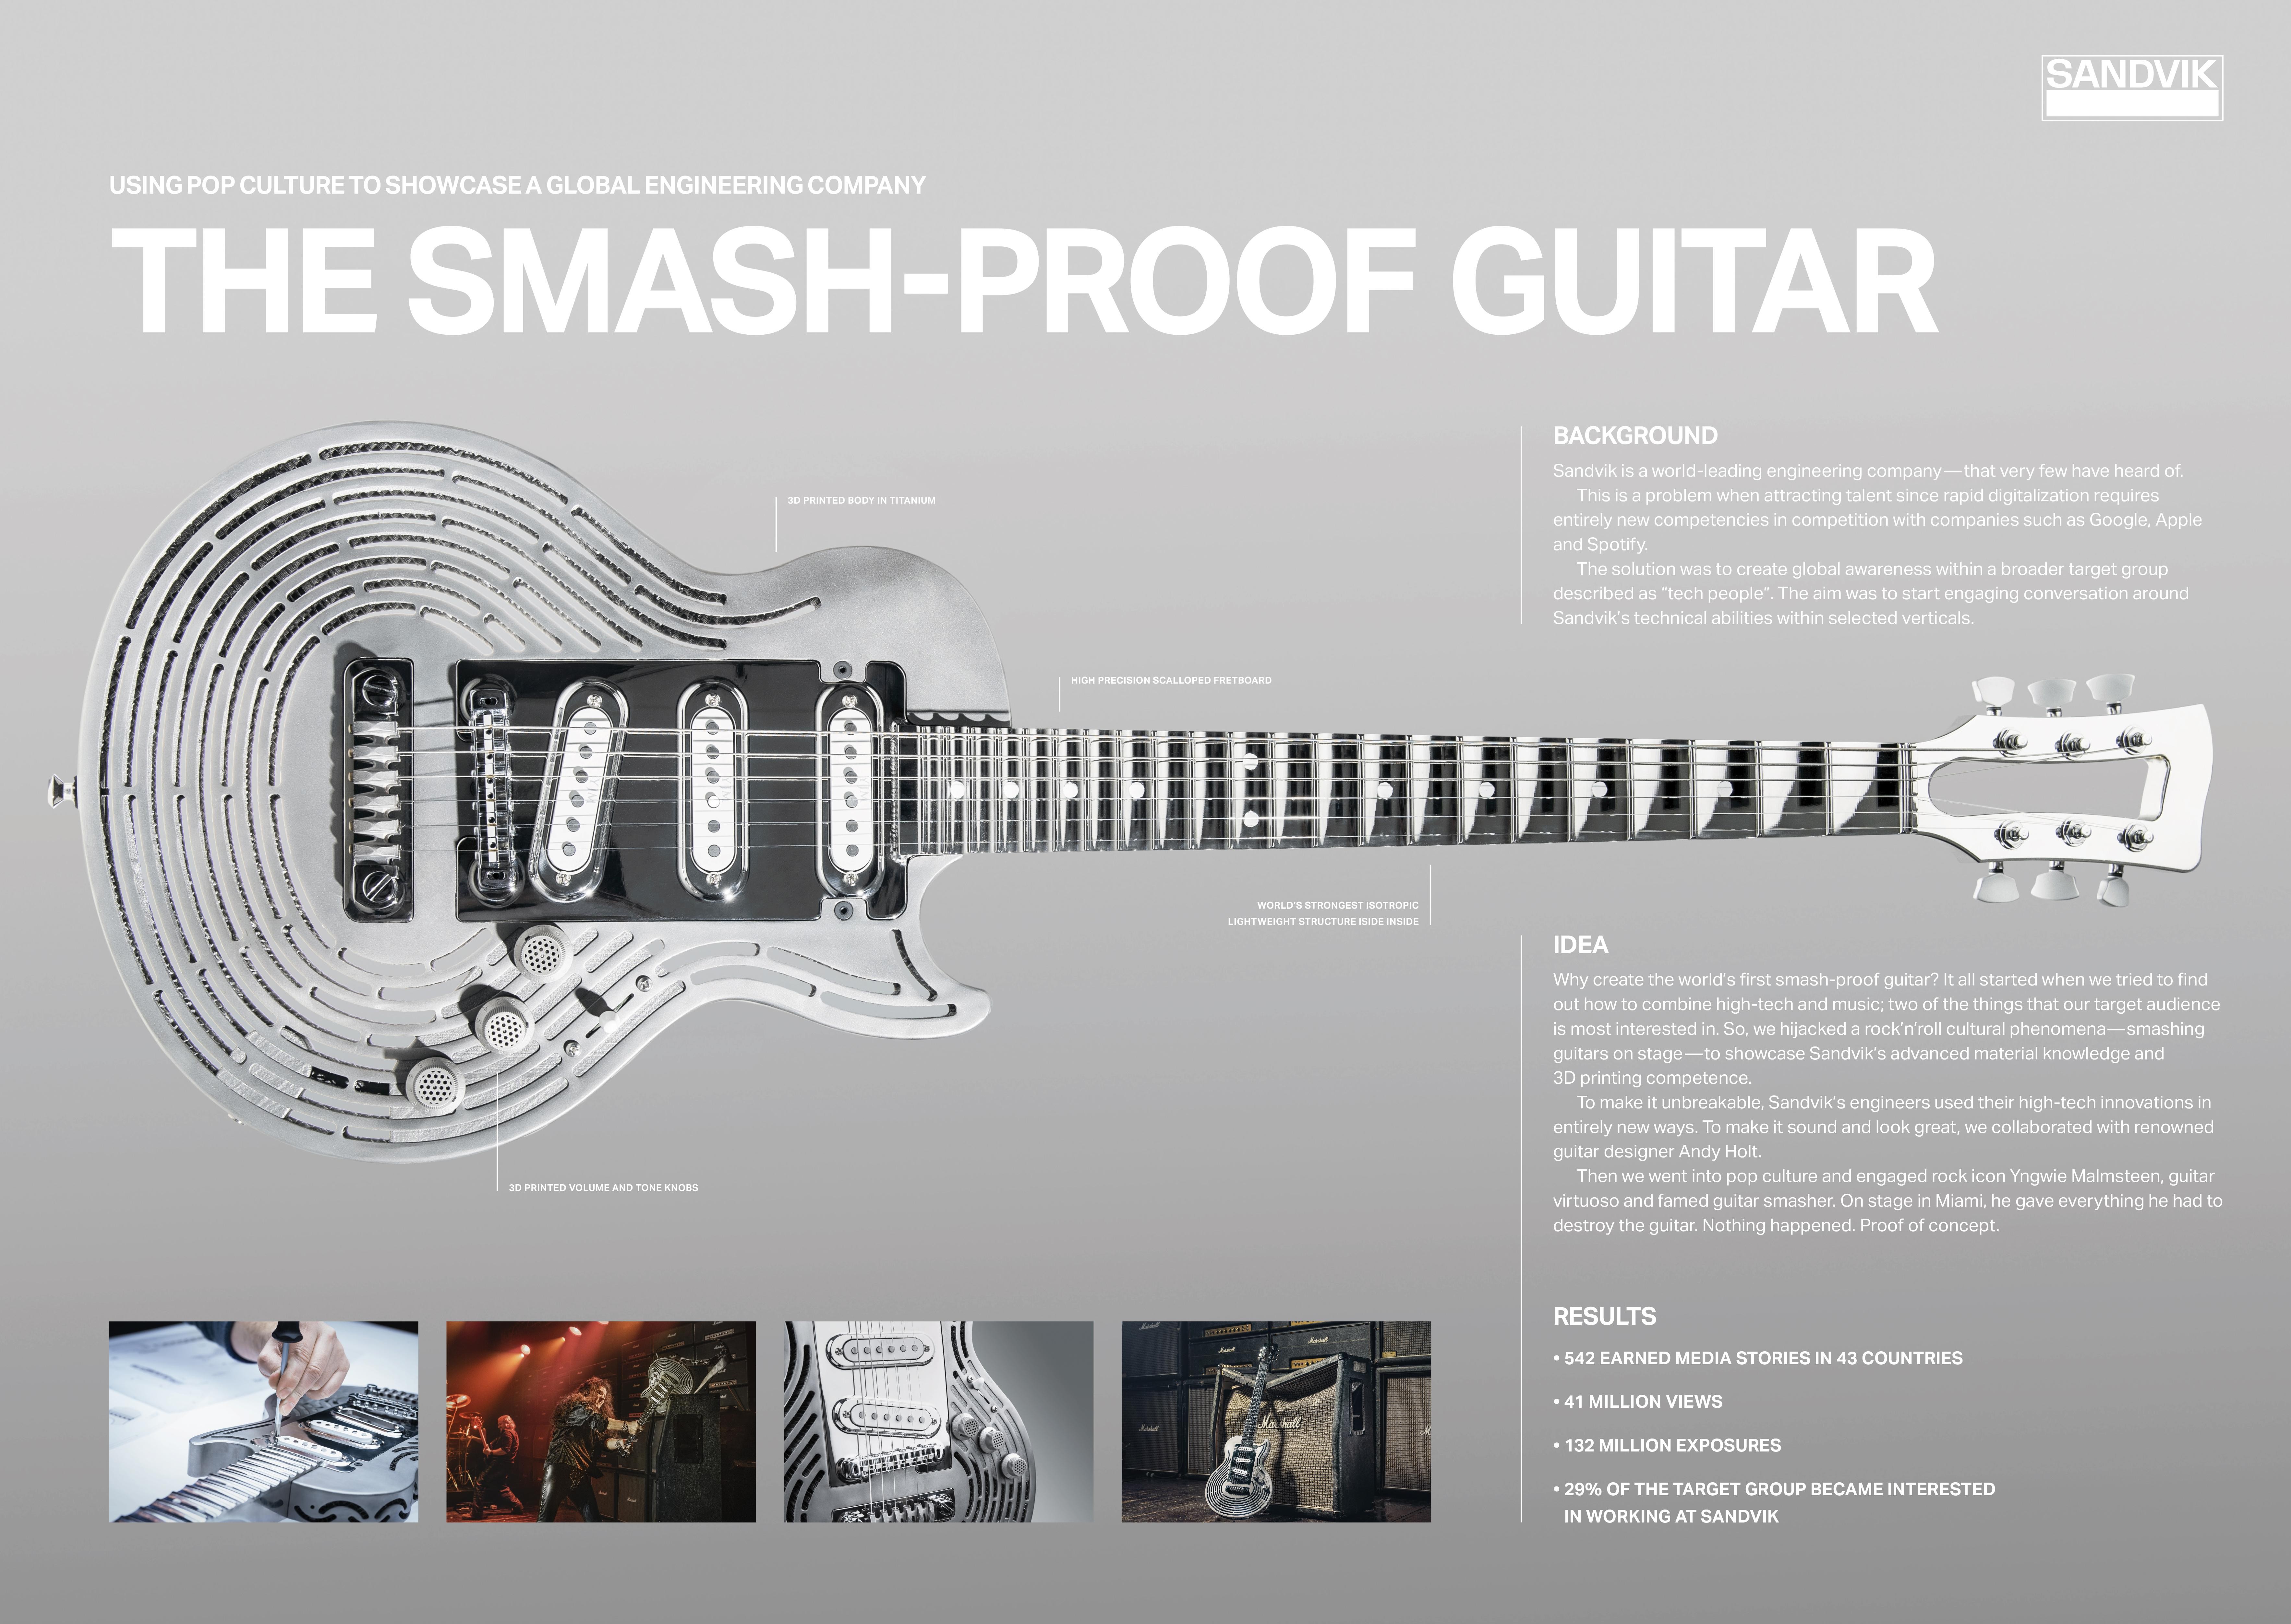 The Smash-Proof Guitar